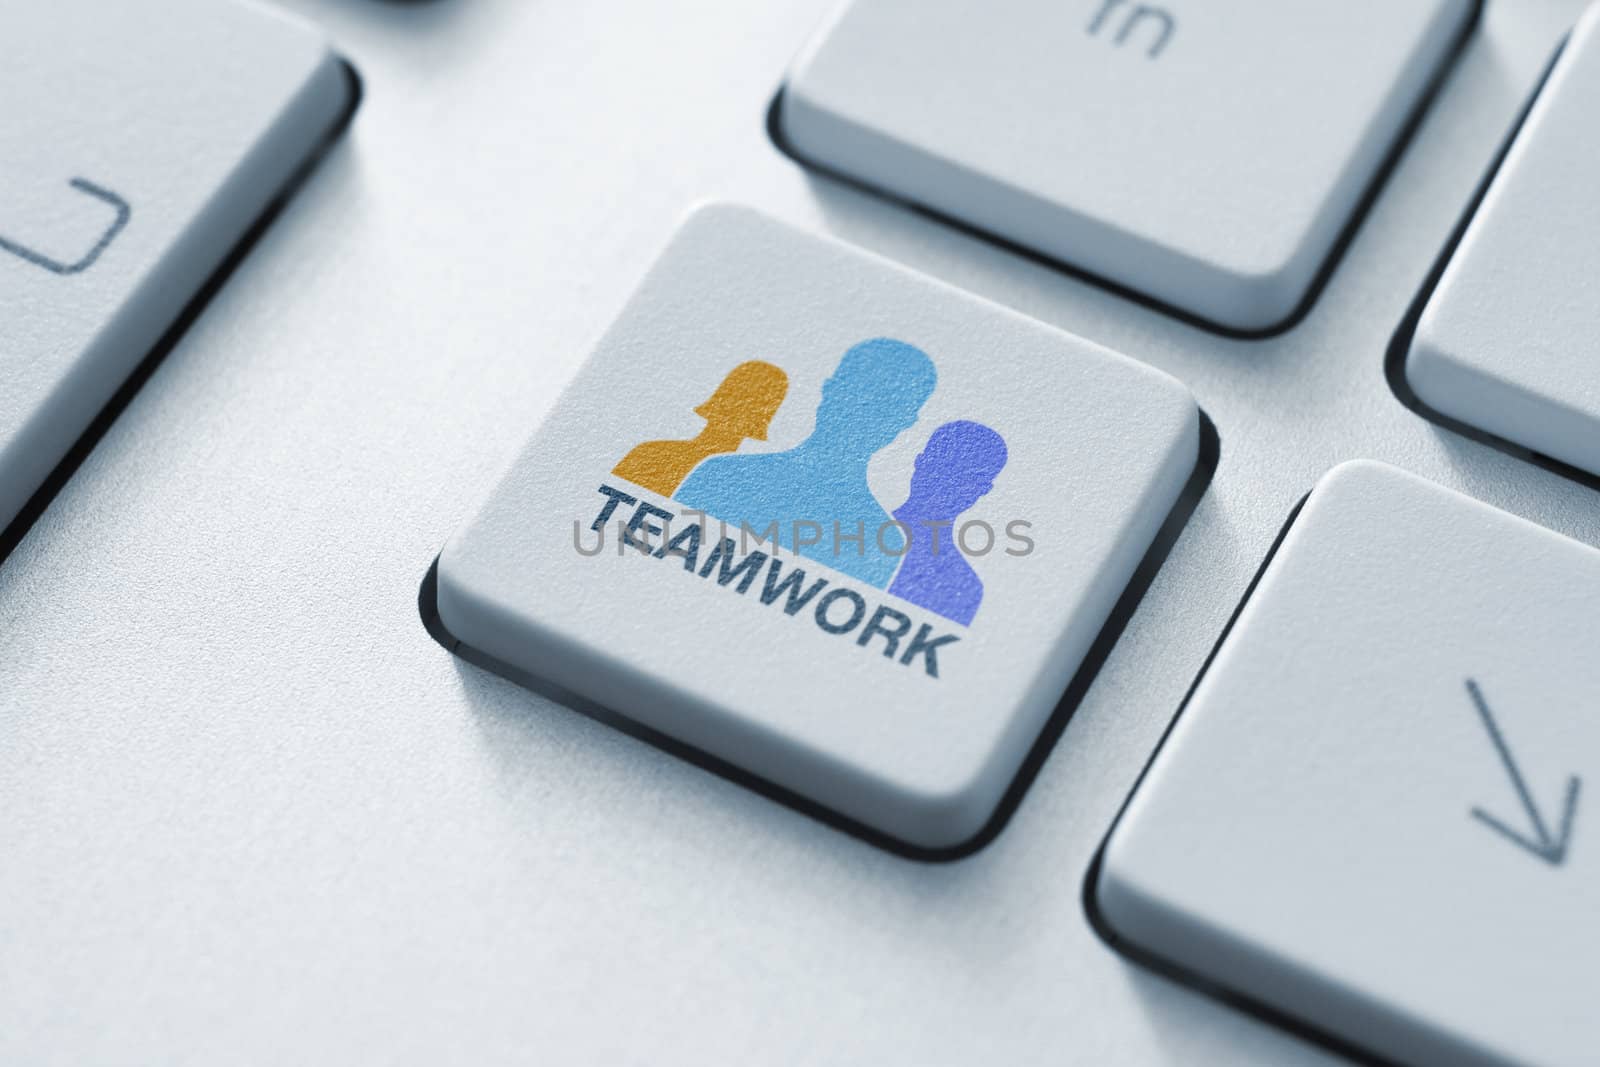 Teamwork Key by bloomua